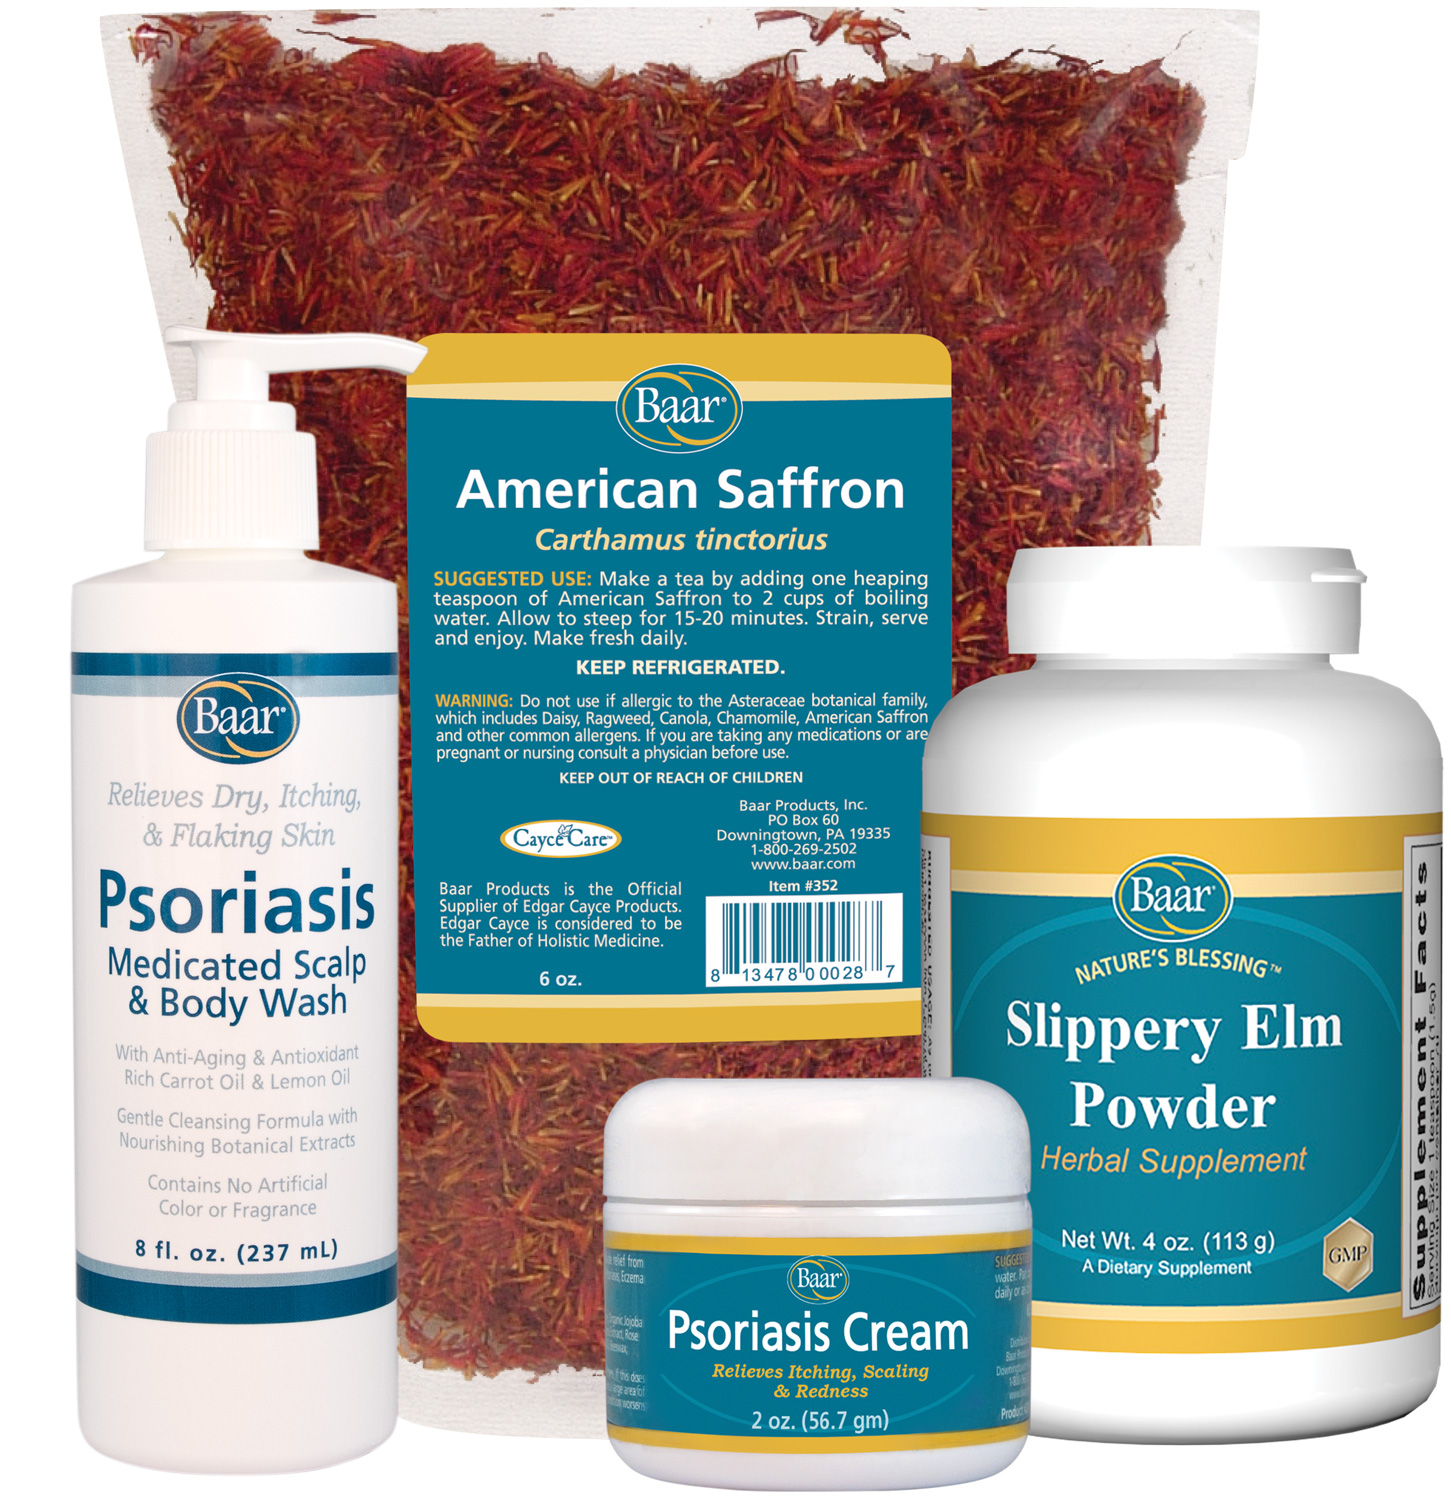 american saffron and slippery elm powder kit